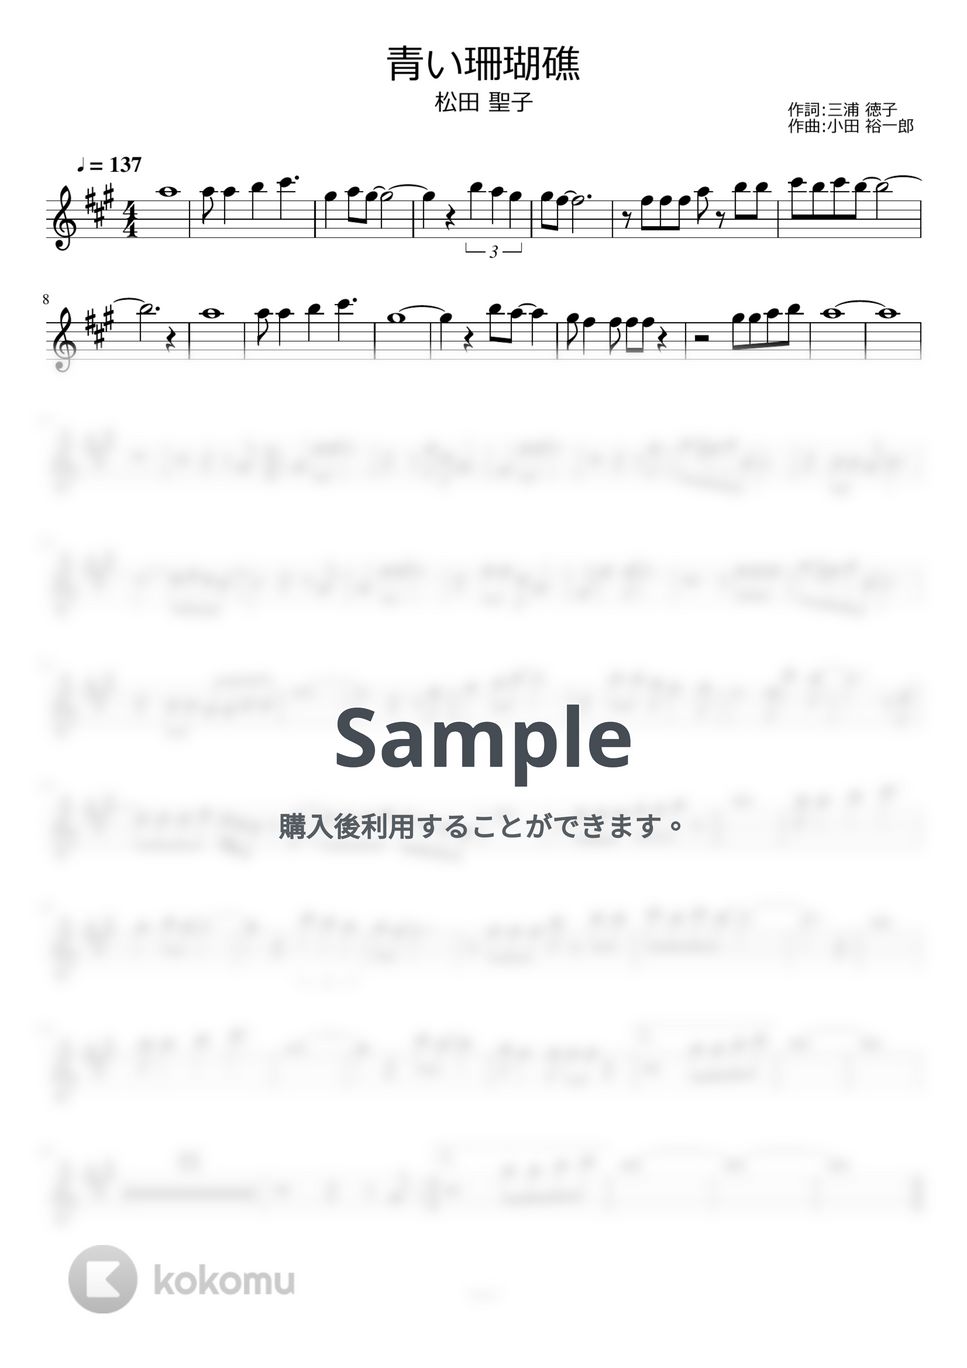 松田聖子 - 青い珊瑚礁 by ayako music school